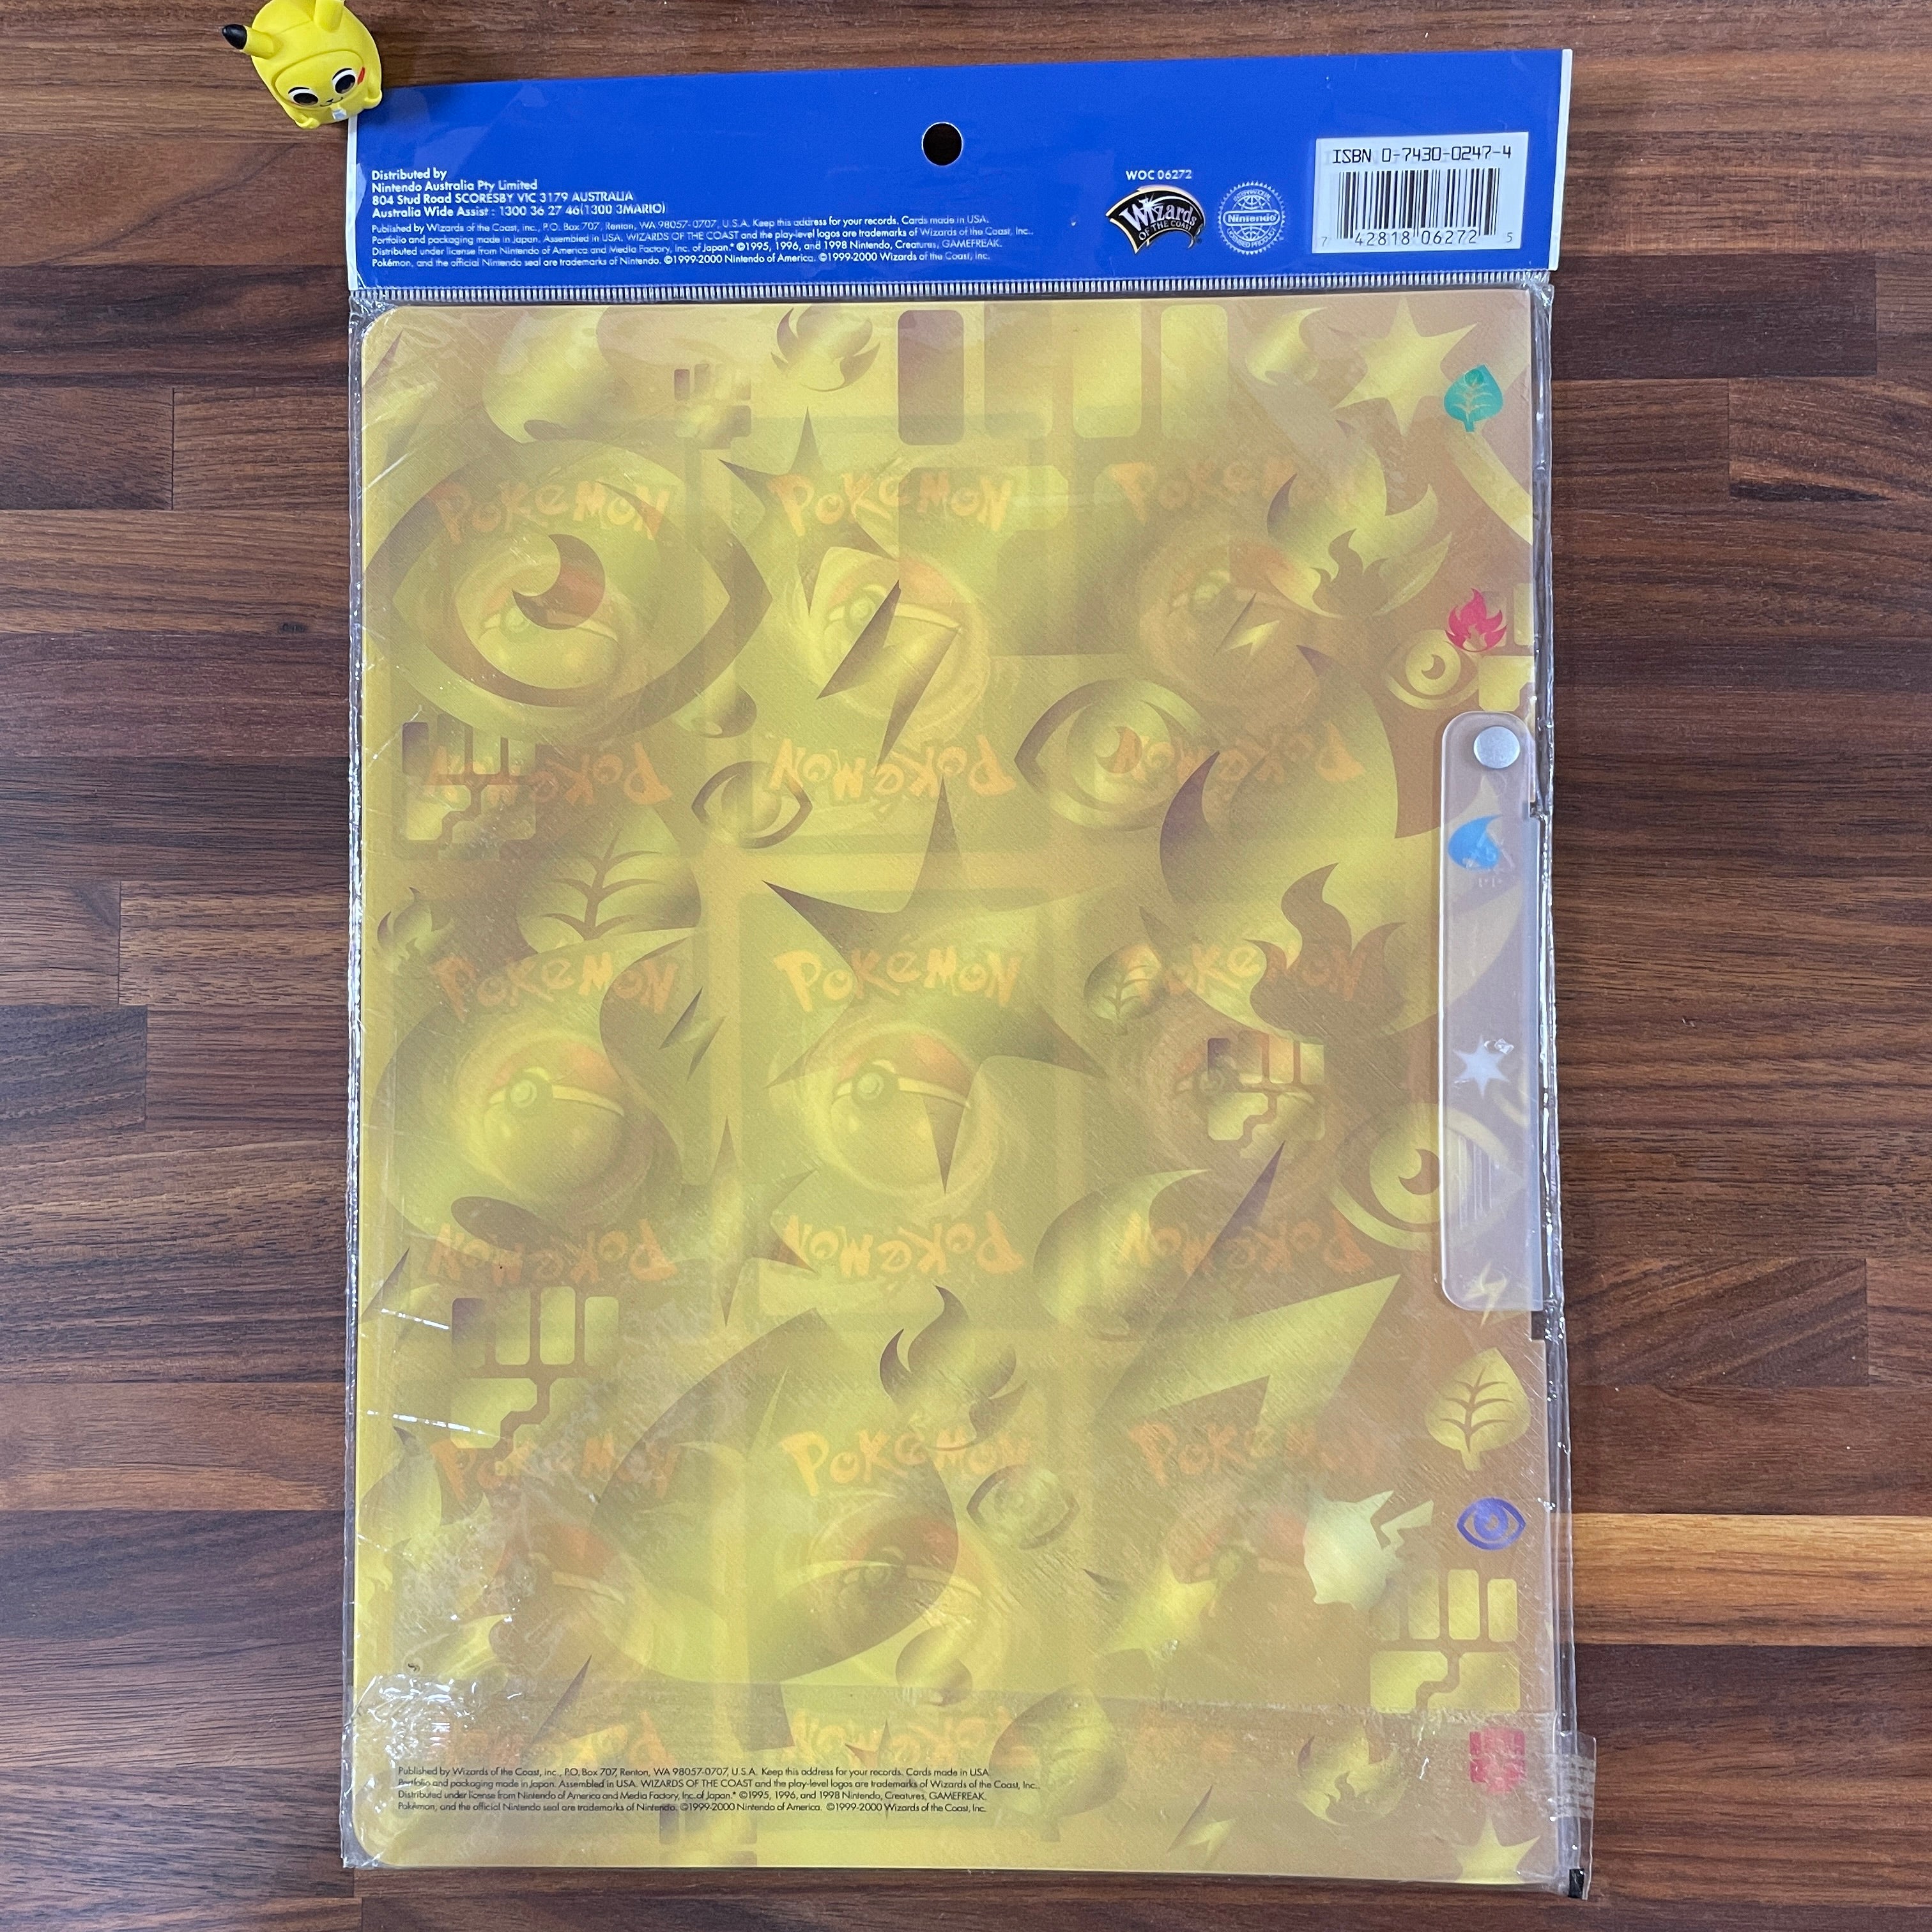 POKÉMON TRADING CARD GAME Pikachu World Collection